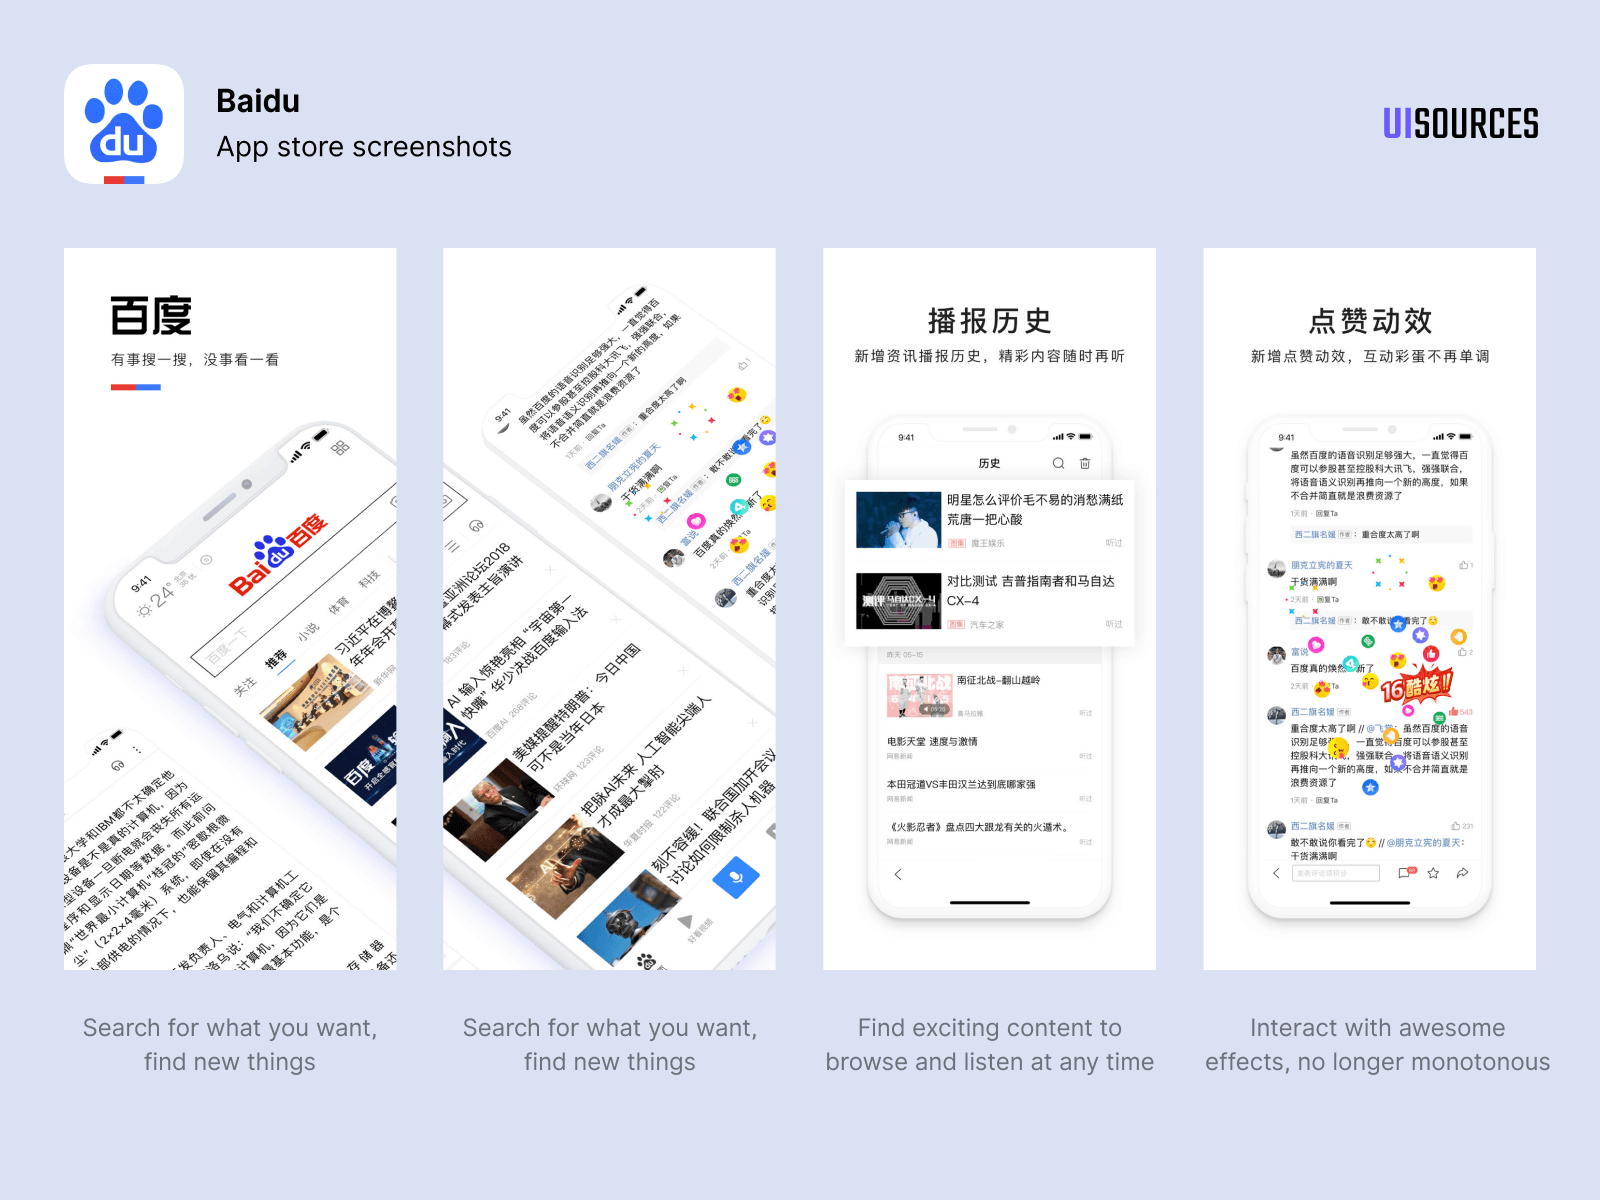 Baidu App Logo - Baidu (百度) - Search engine and news | UI Sources